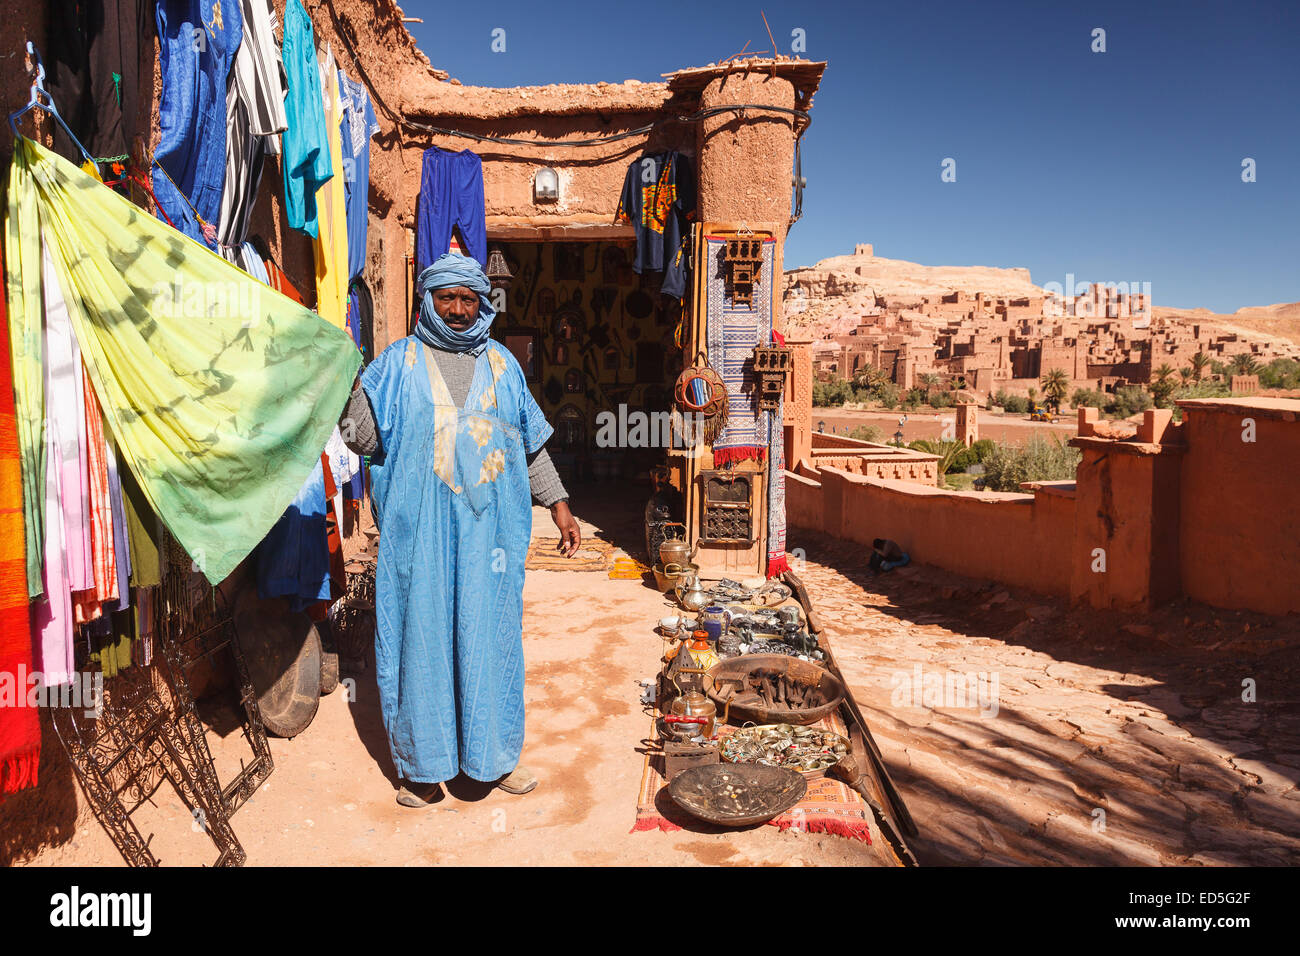 Shop. Ait ben haddou. Atlas mountian. Morocco. North Africa. Africa Stock Photo